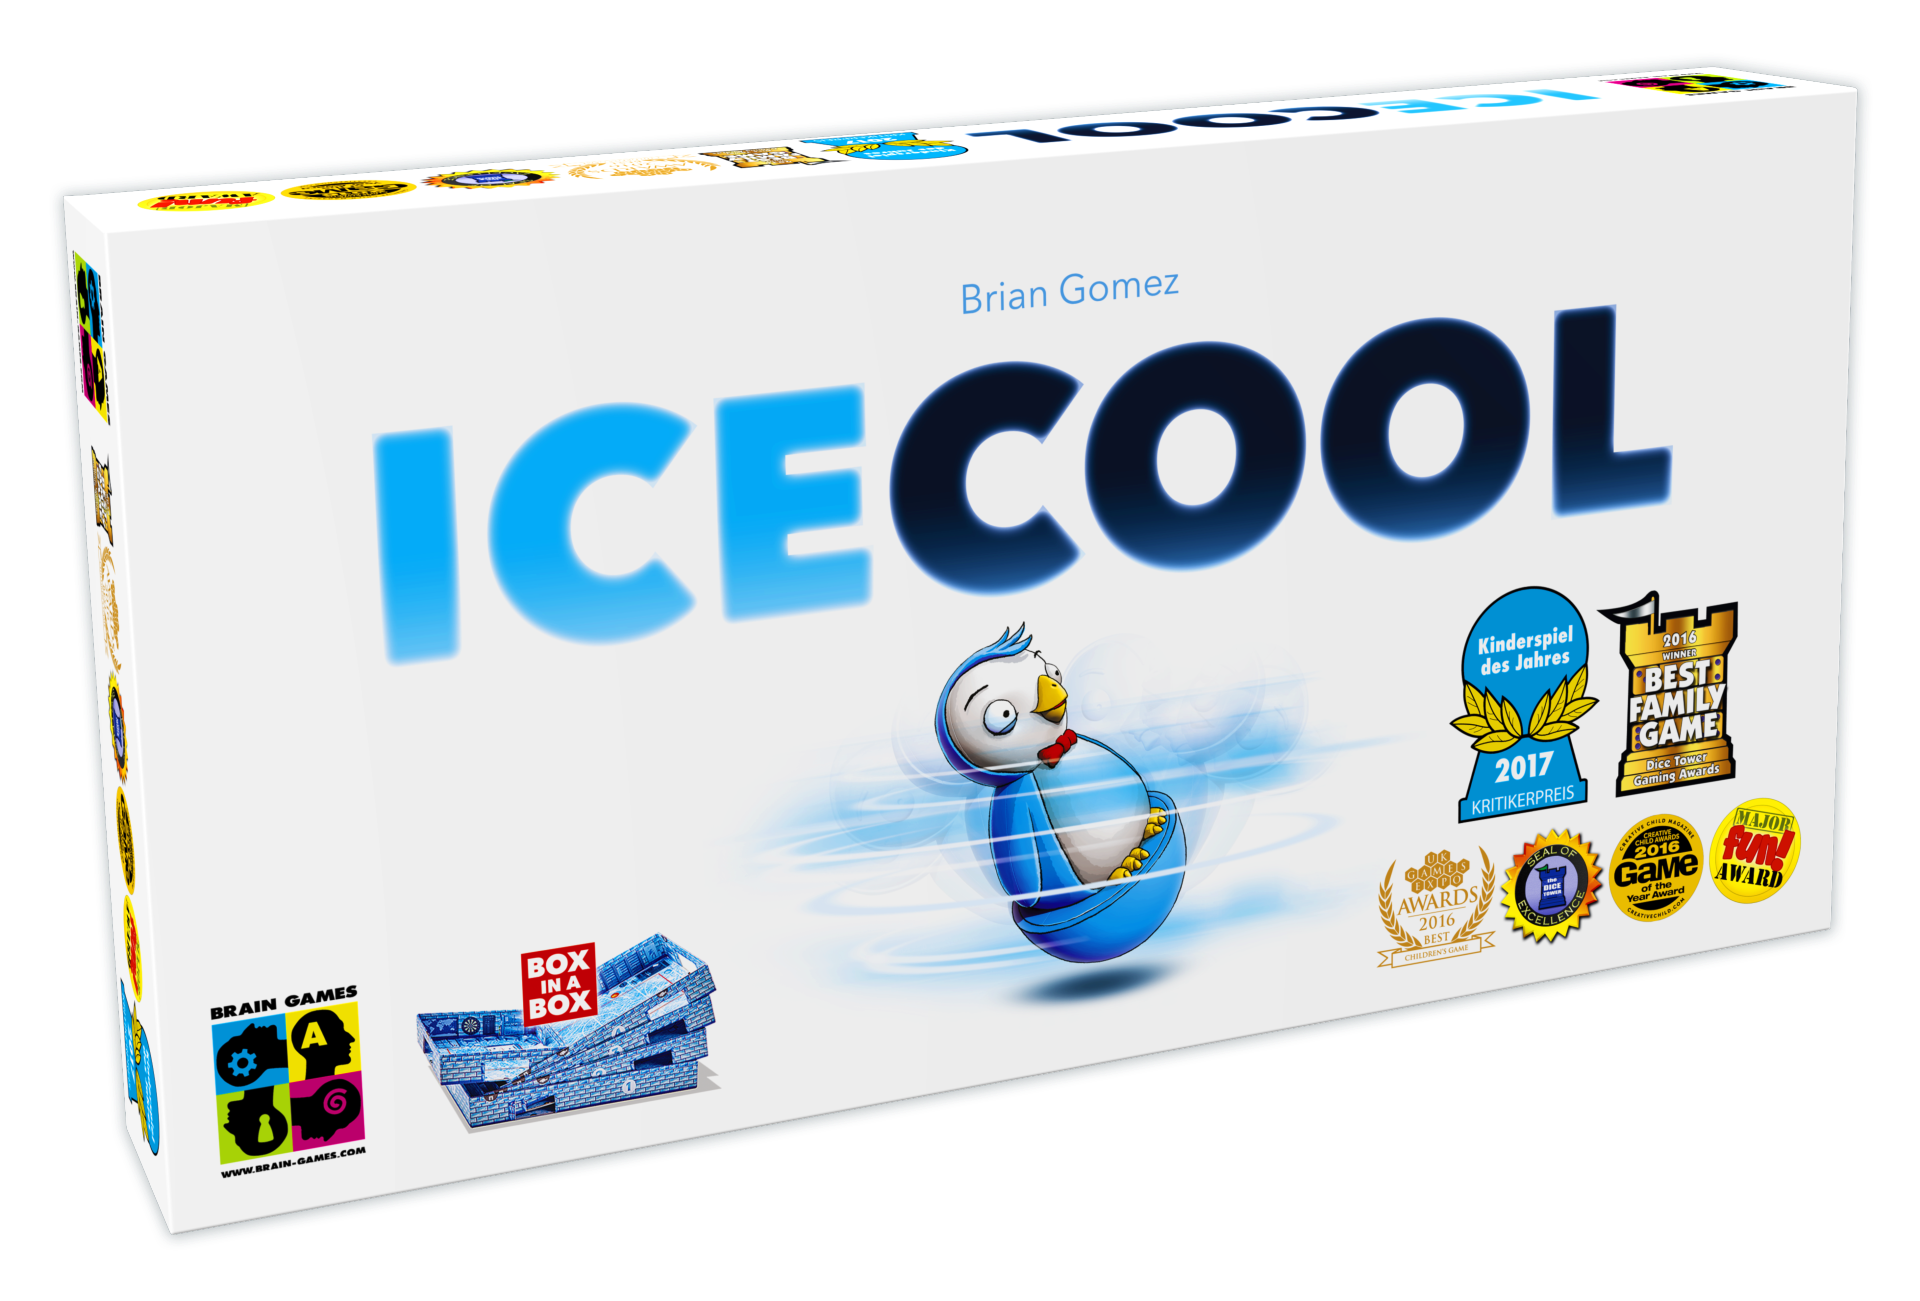 Boîte du jeu Ice Cool